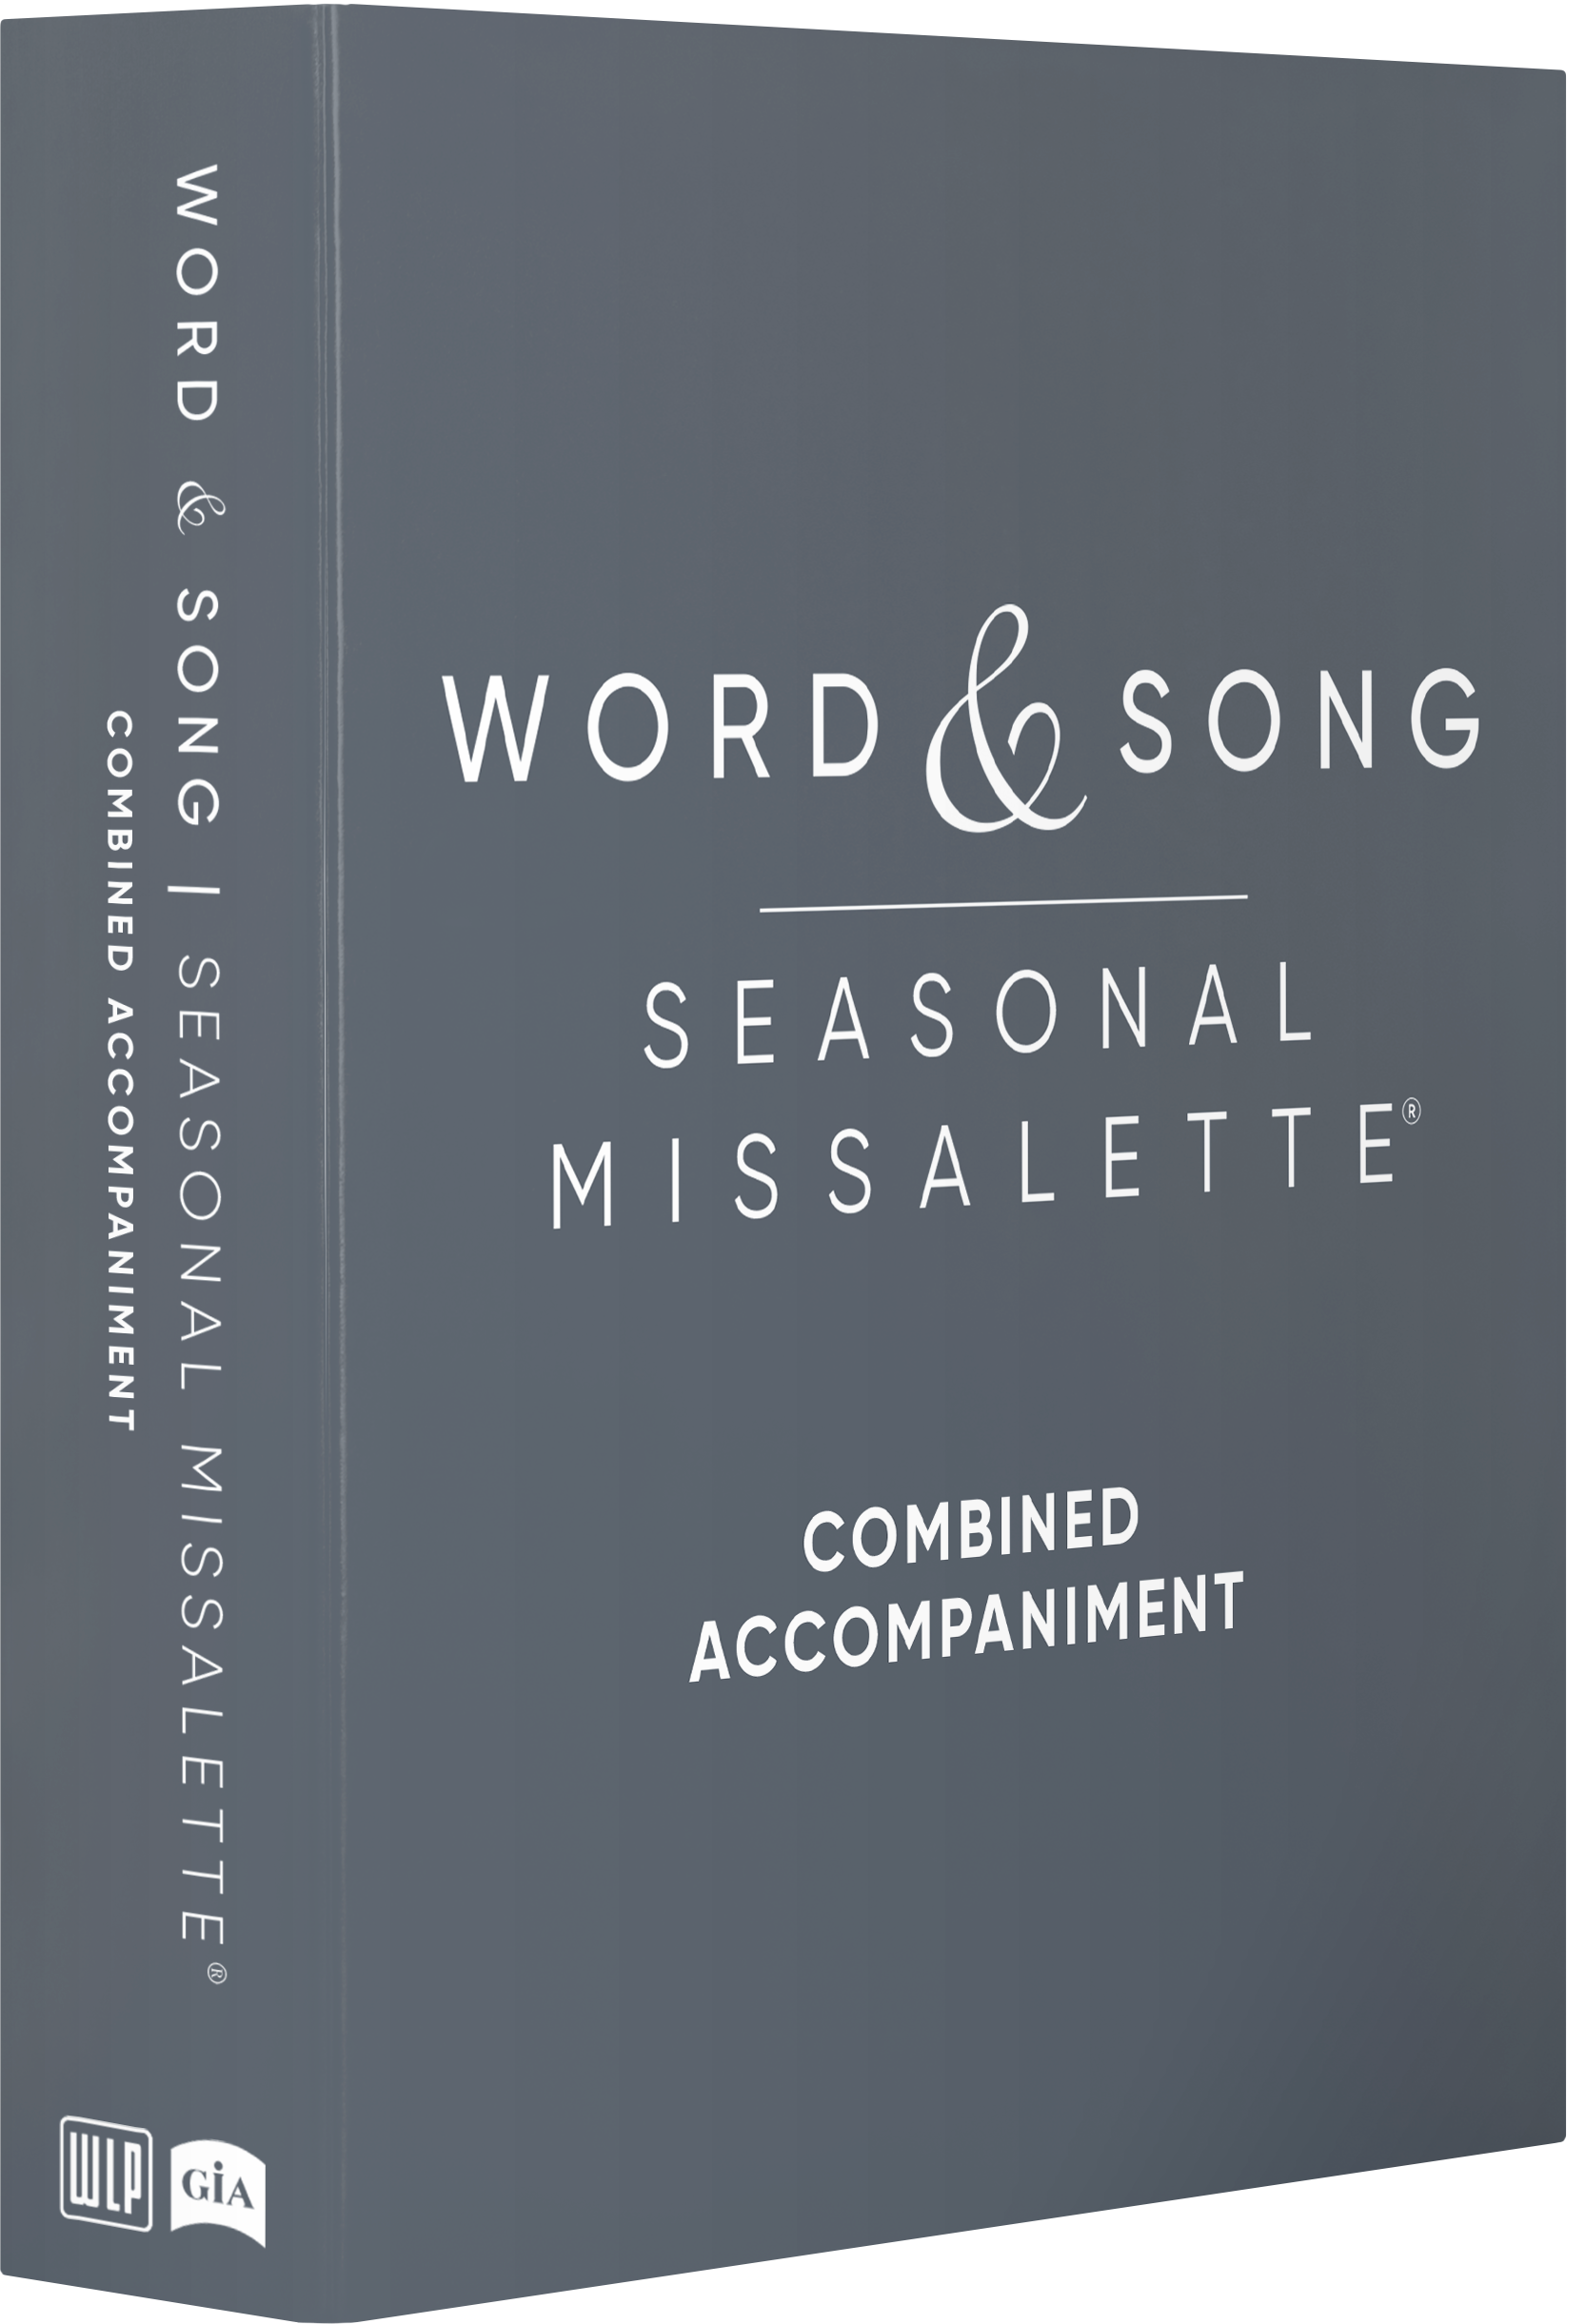 GIA Publications Missals Seasonal Missalette